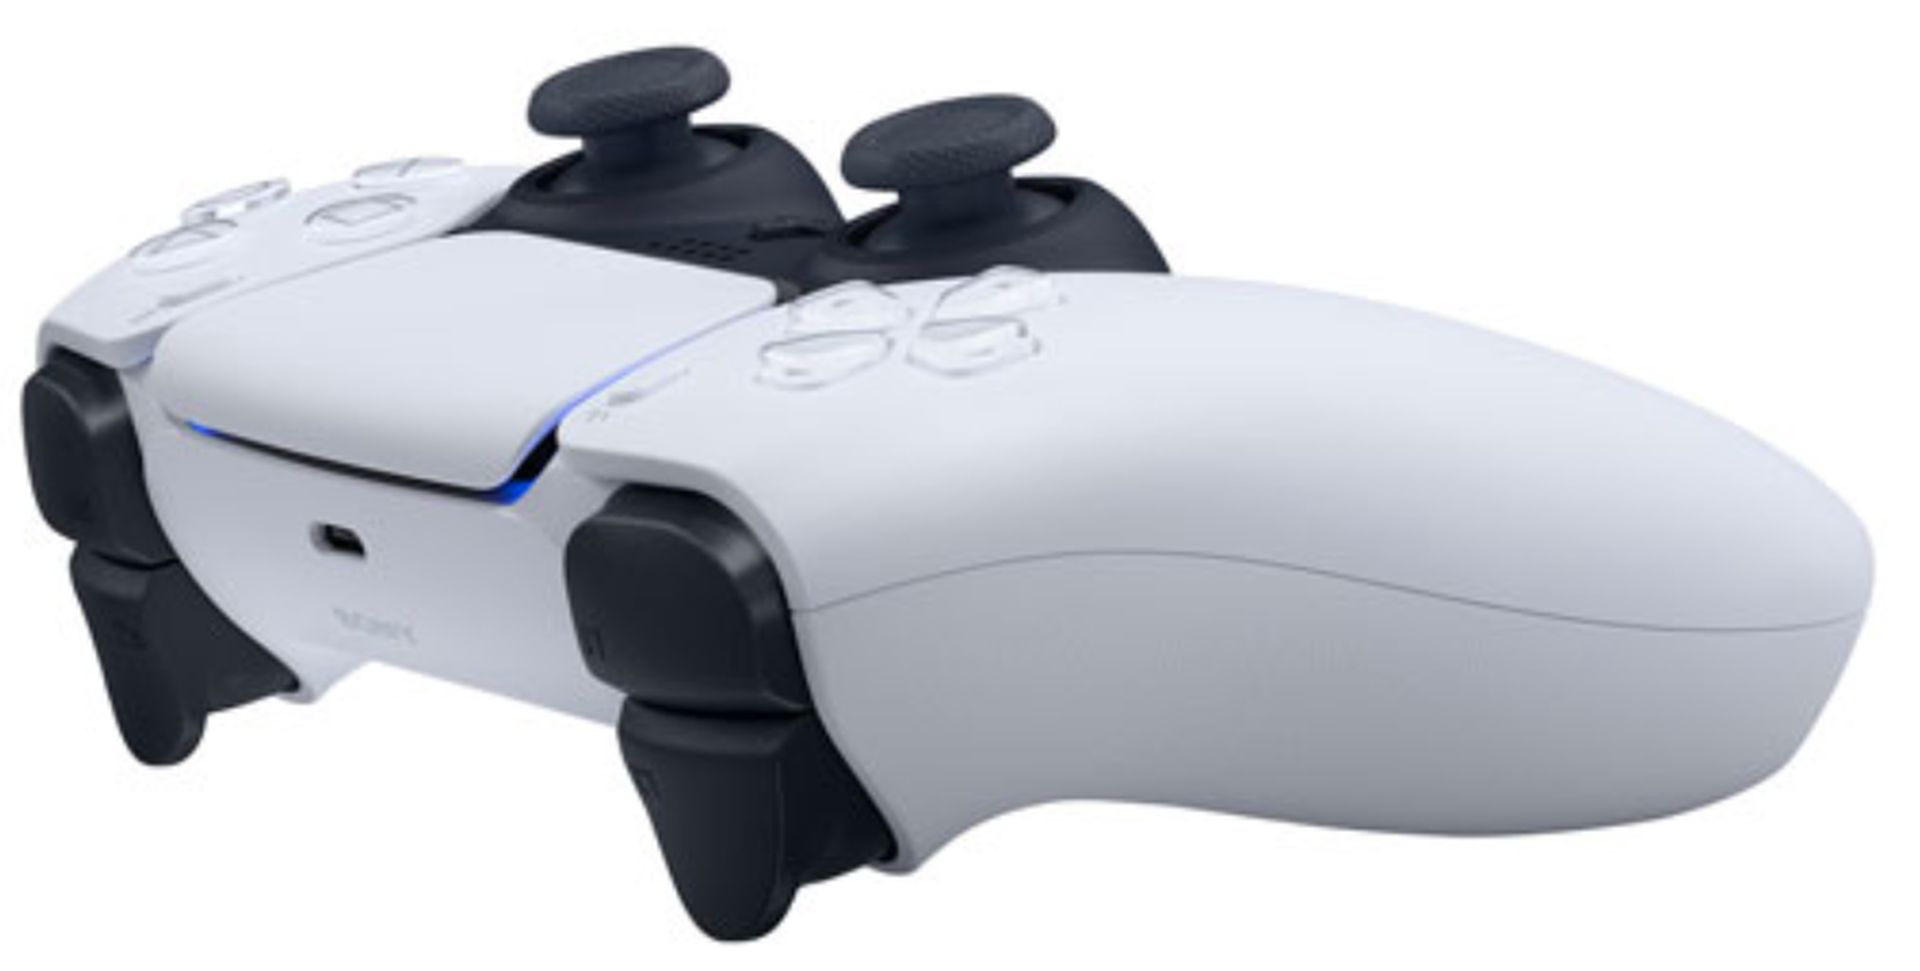 PS5 DualSense V2 controller unveiled